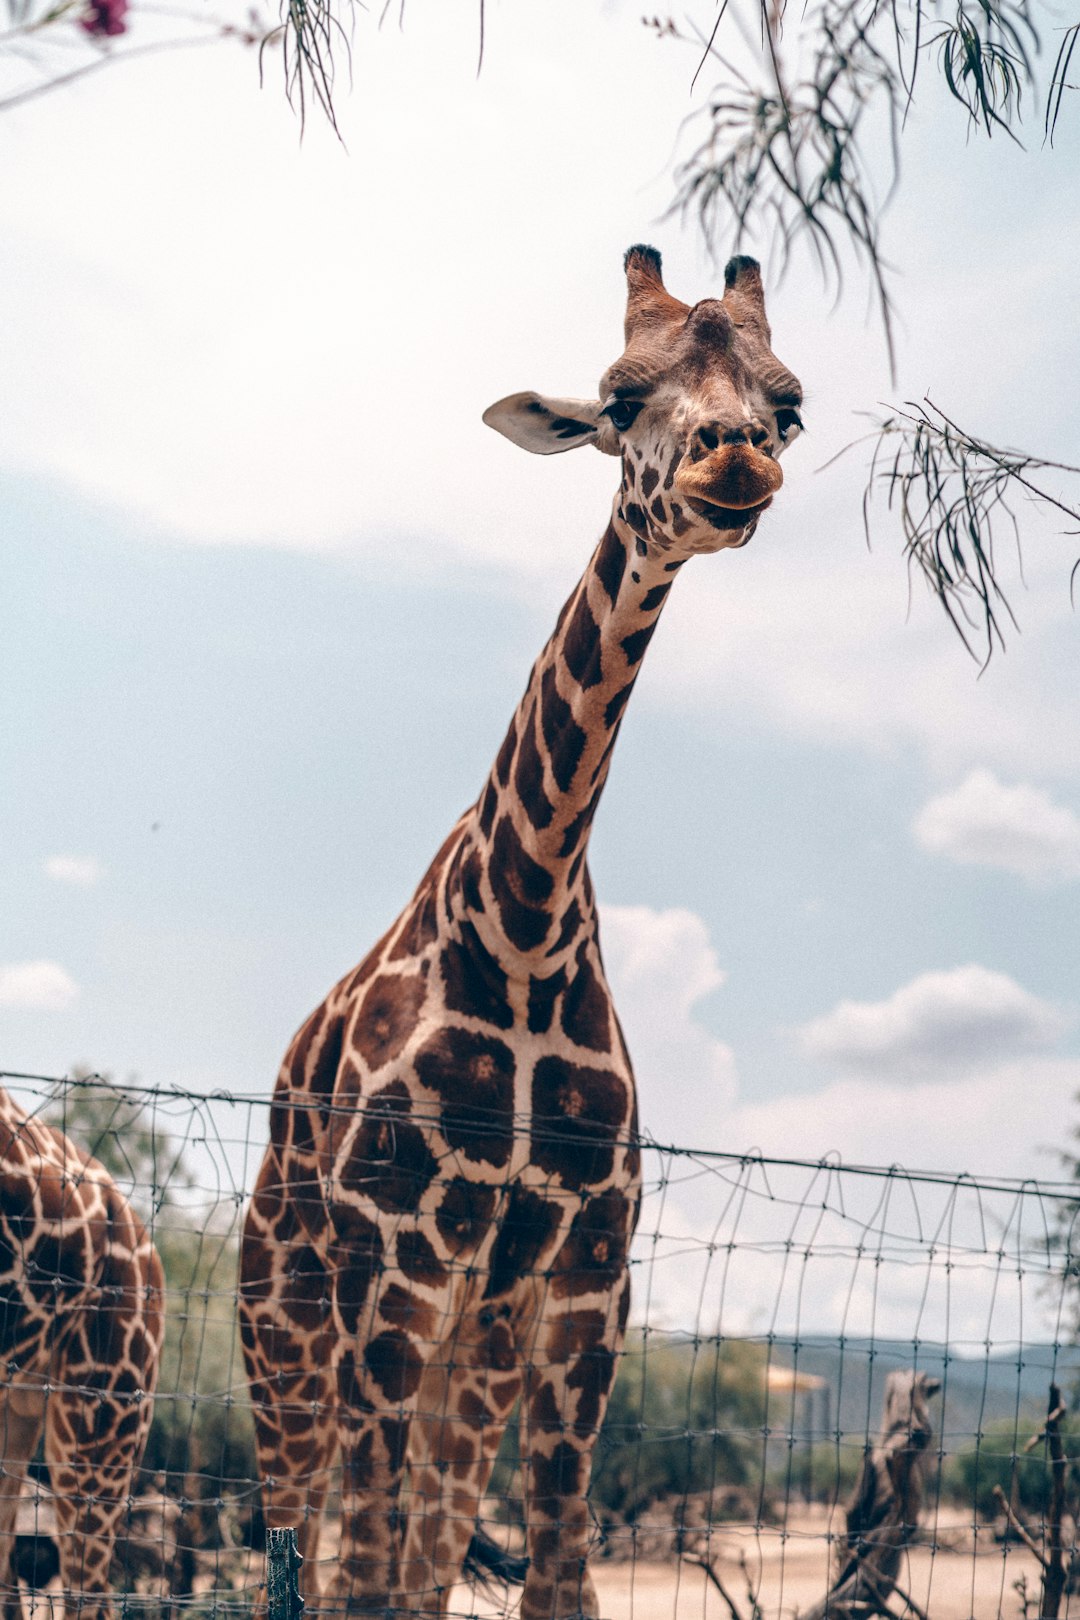 giraffe standing near brown metal fence during daytime